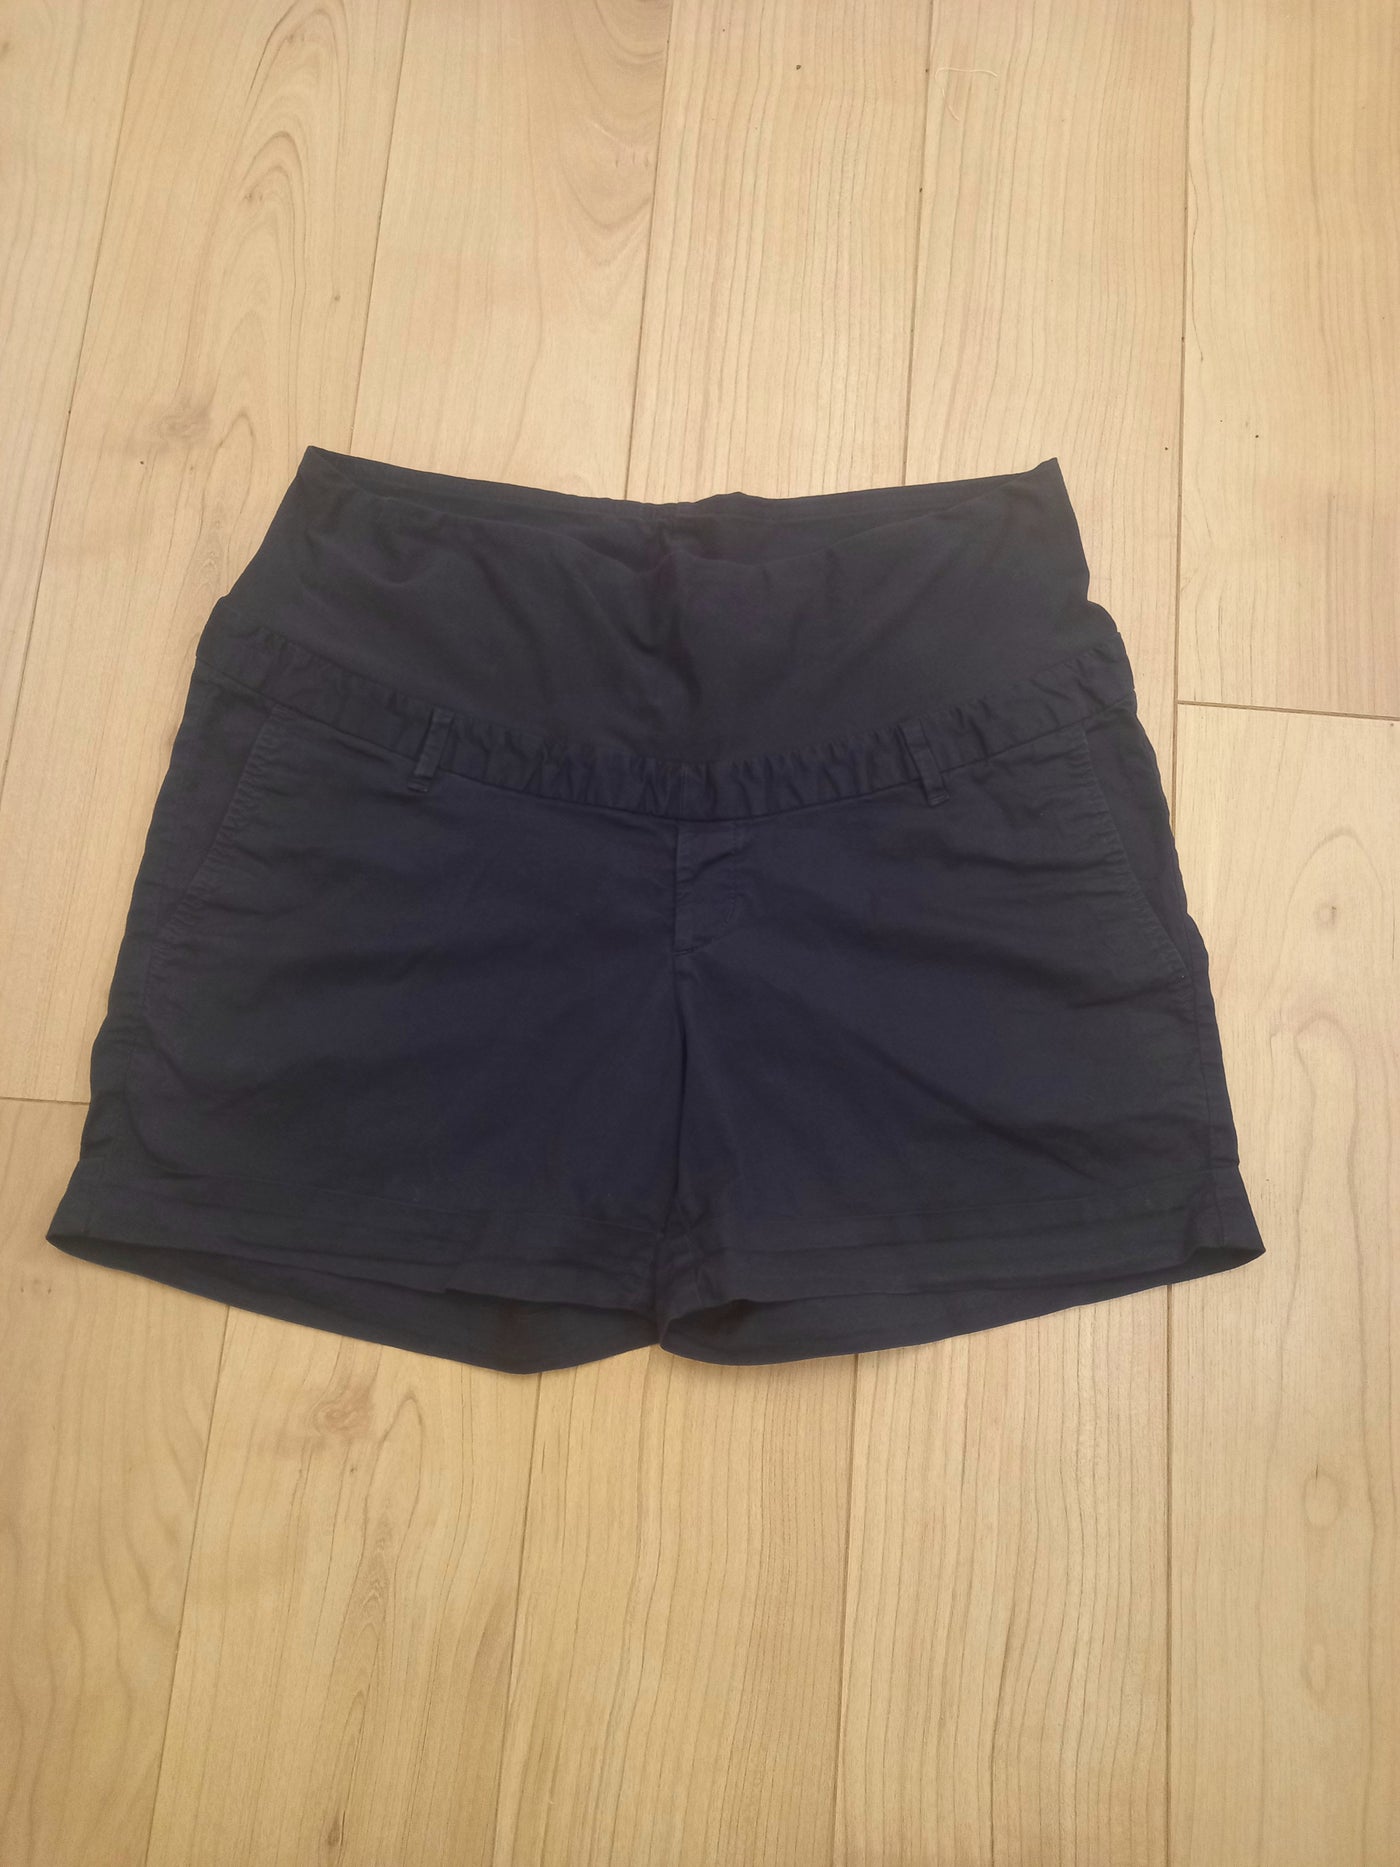 H&M Mama navy overbump shorts - Size 18 (more like 16/18)